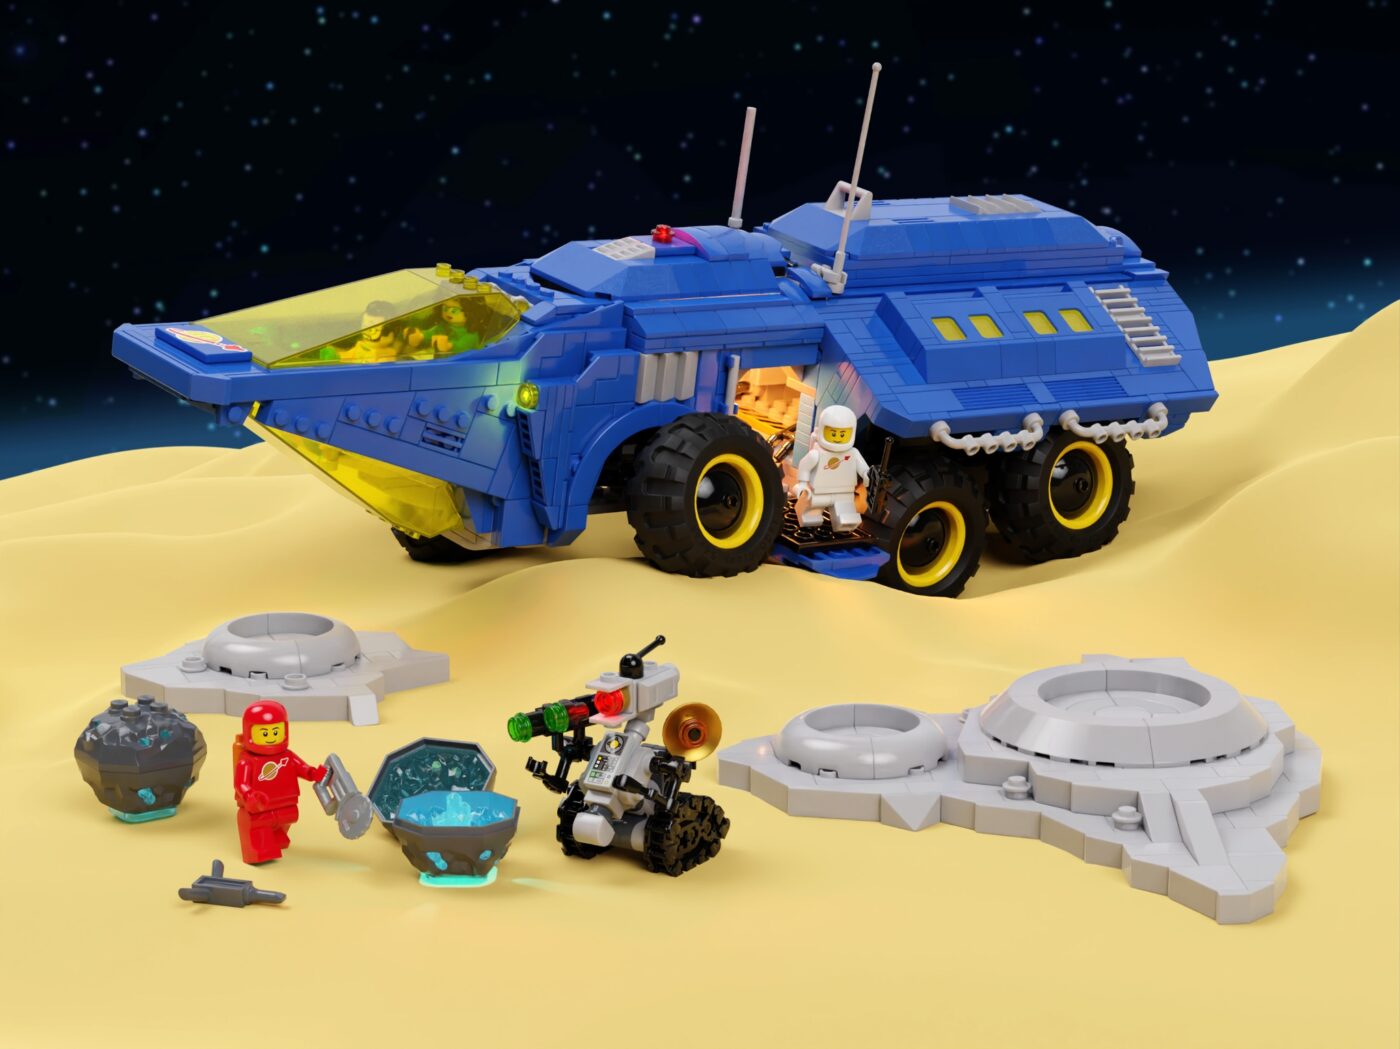 LEGO Bricklink Designer Program Series 2 Exoplanet Explorer